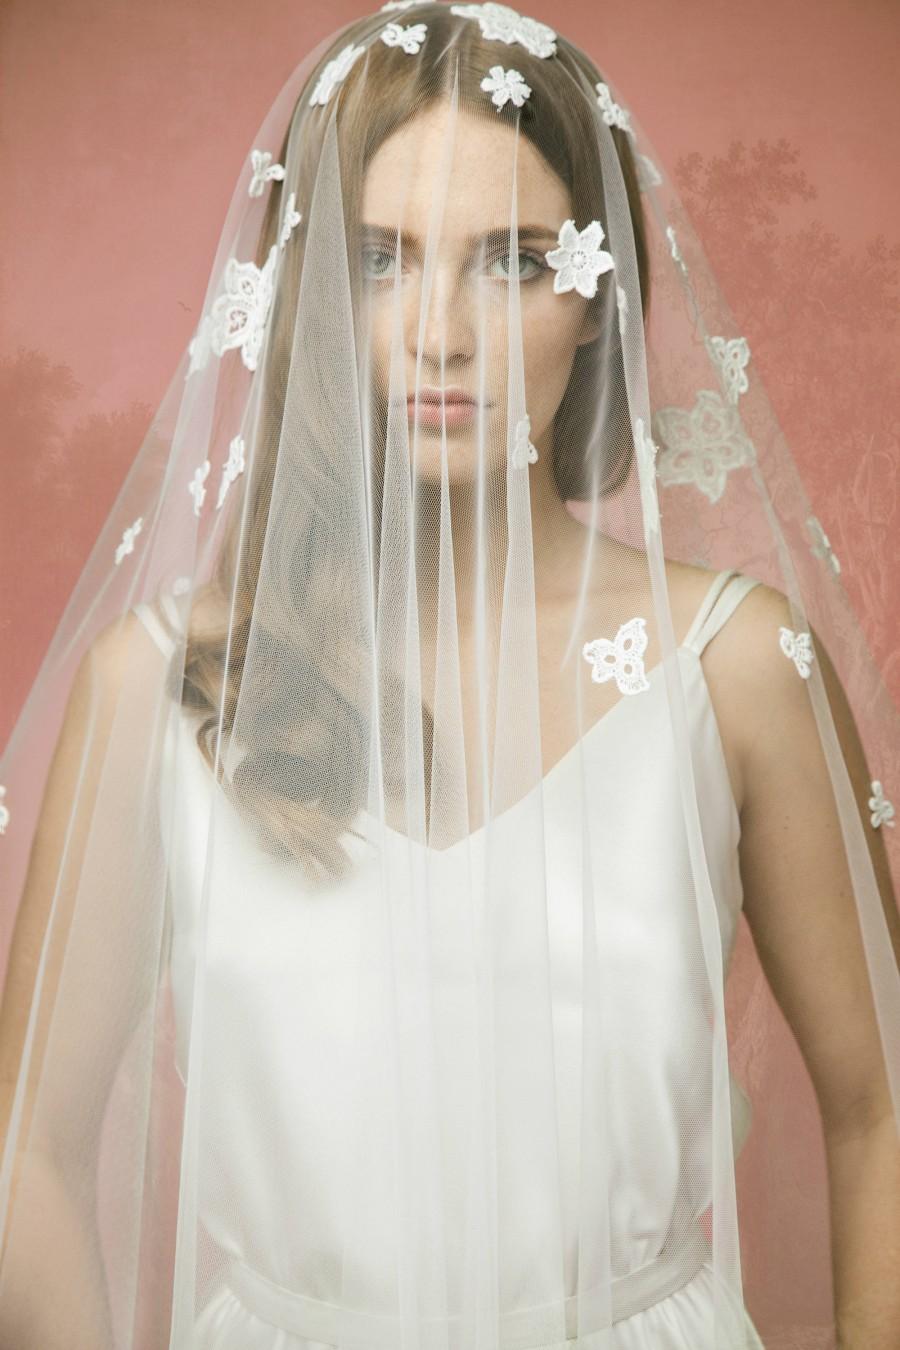 Mariage - Lace Bridal Veil A10, Lace Wedding Veil, Lace Applique Veil,Cotton Lace Veil, Tulle Lace Veil, Double Layer Veil, Cathedral Veil, Chapel